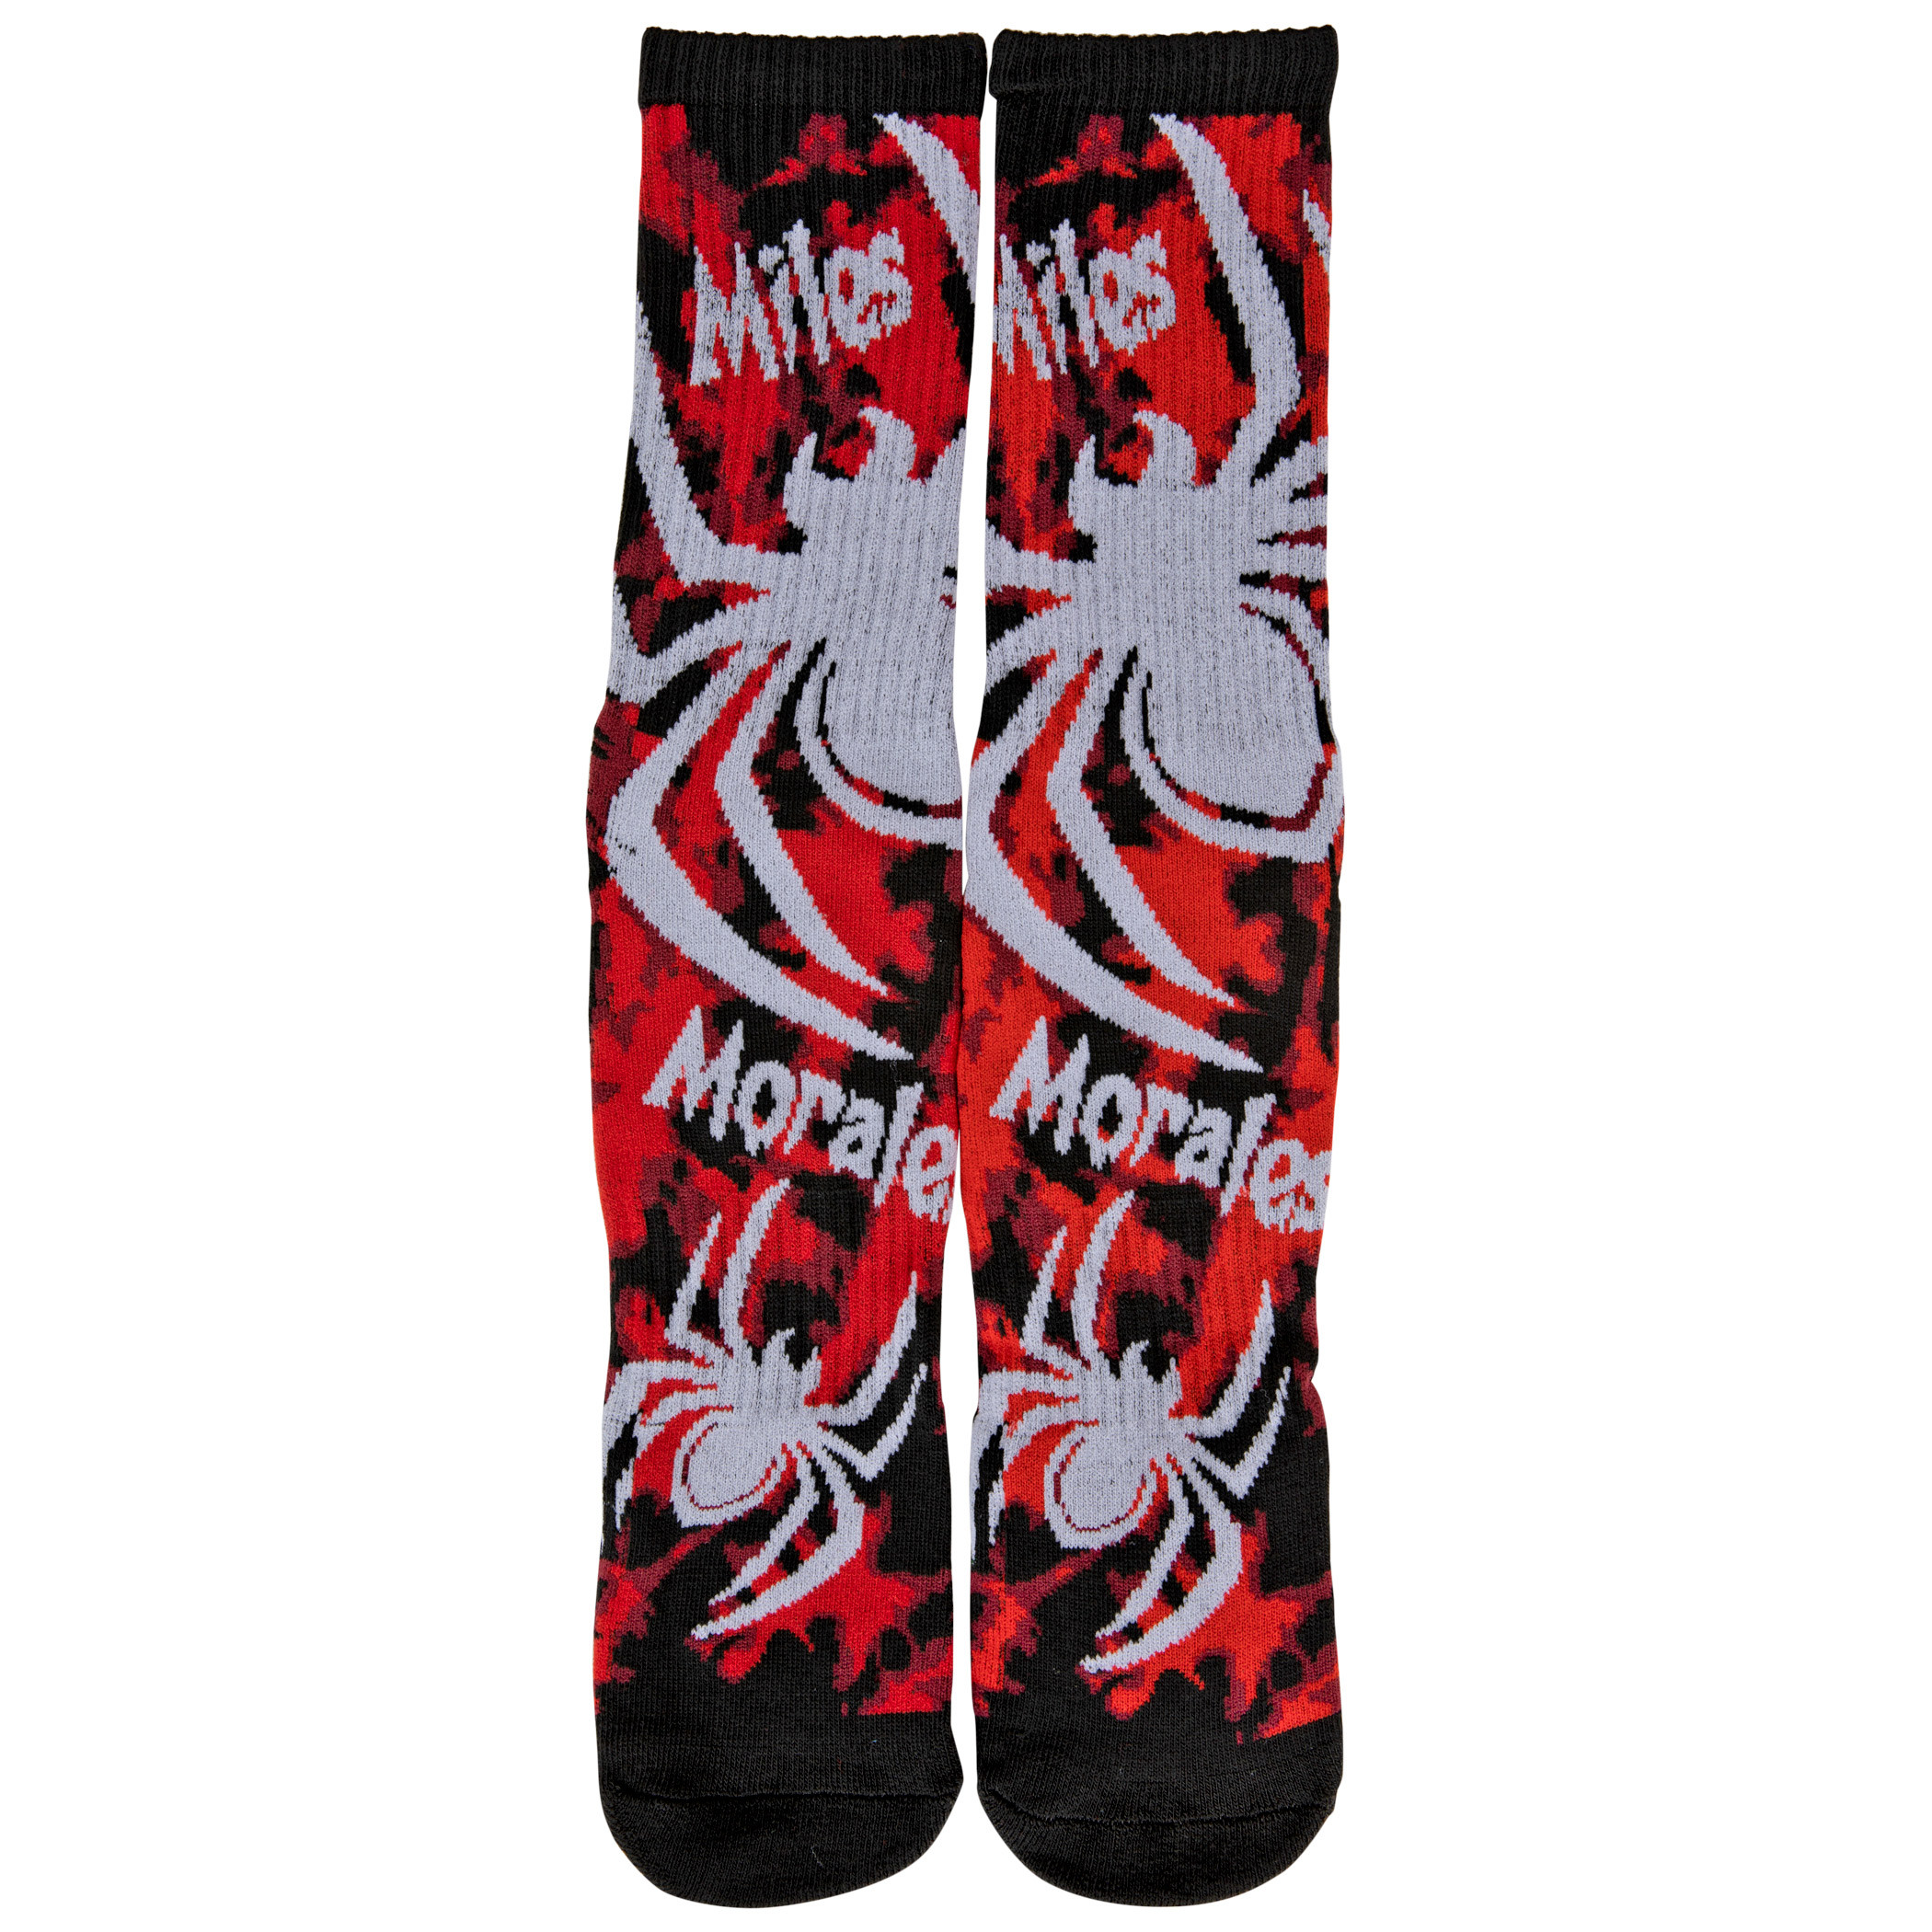 Marvel Socks - Marvel Puppet Spider-Man Crew Socks - Marvel Official